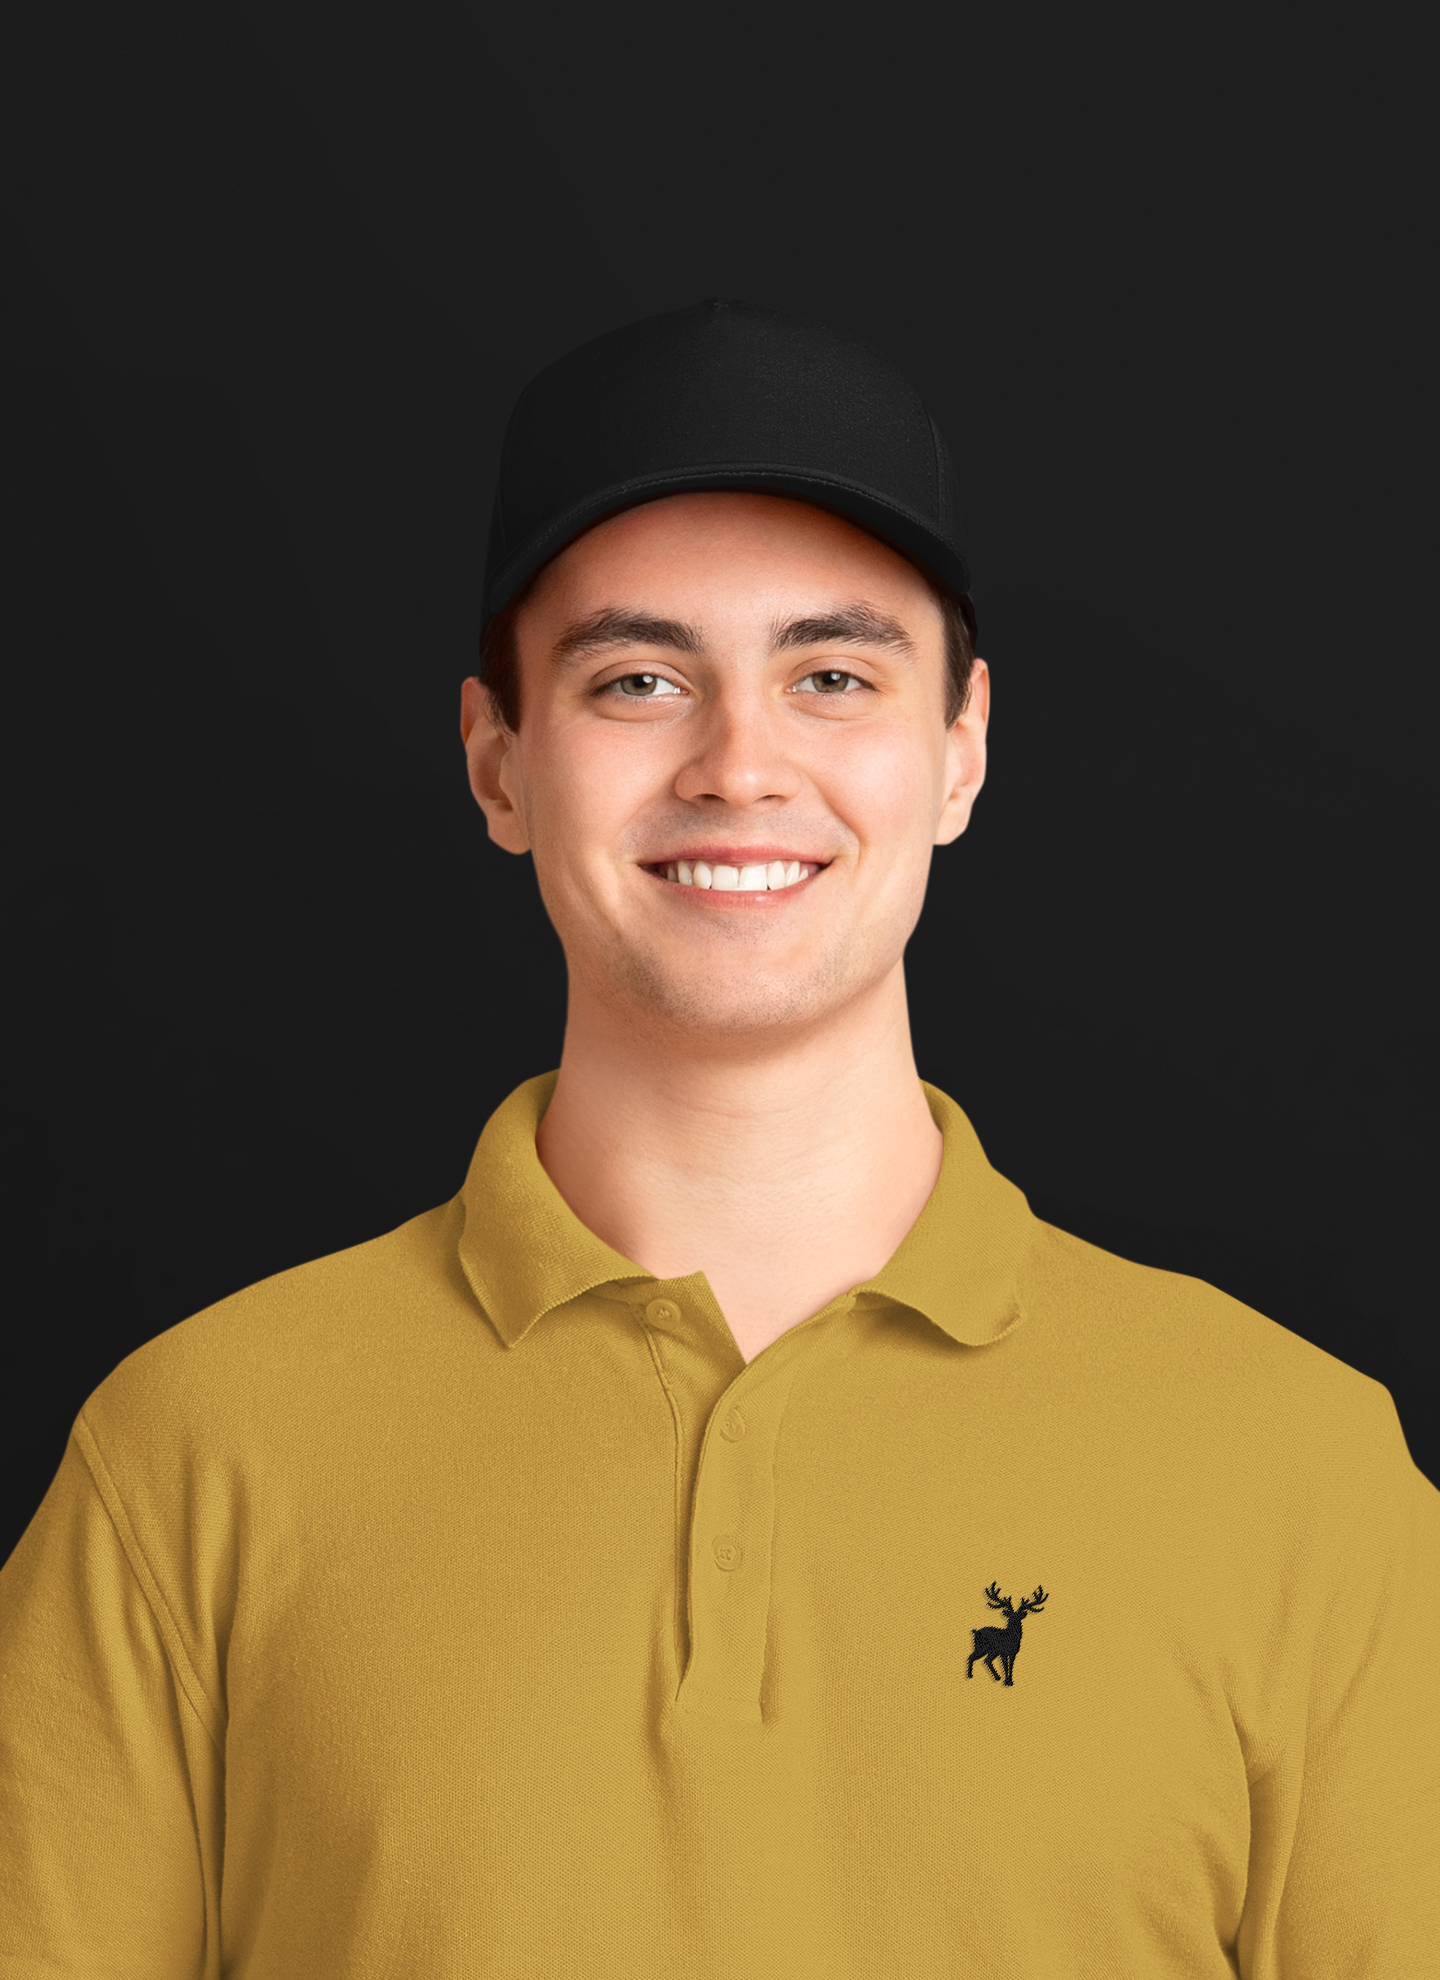 Classic ATOM Black Logo Mustard Yellow Polo Neck T-Shirt For Men